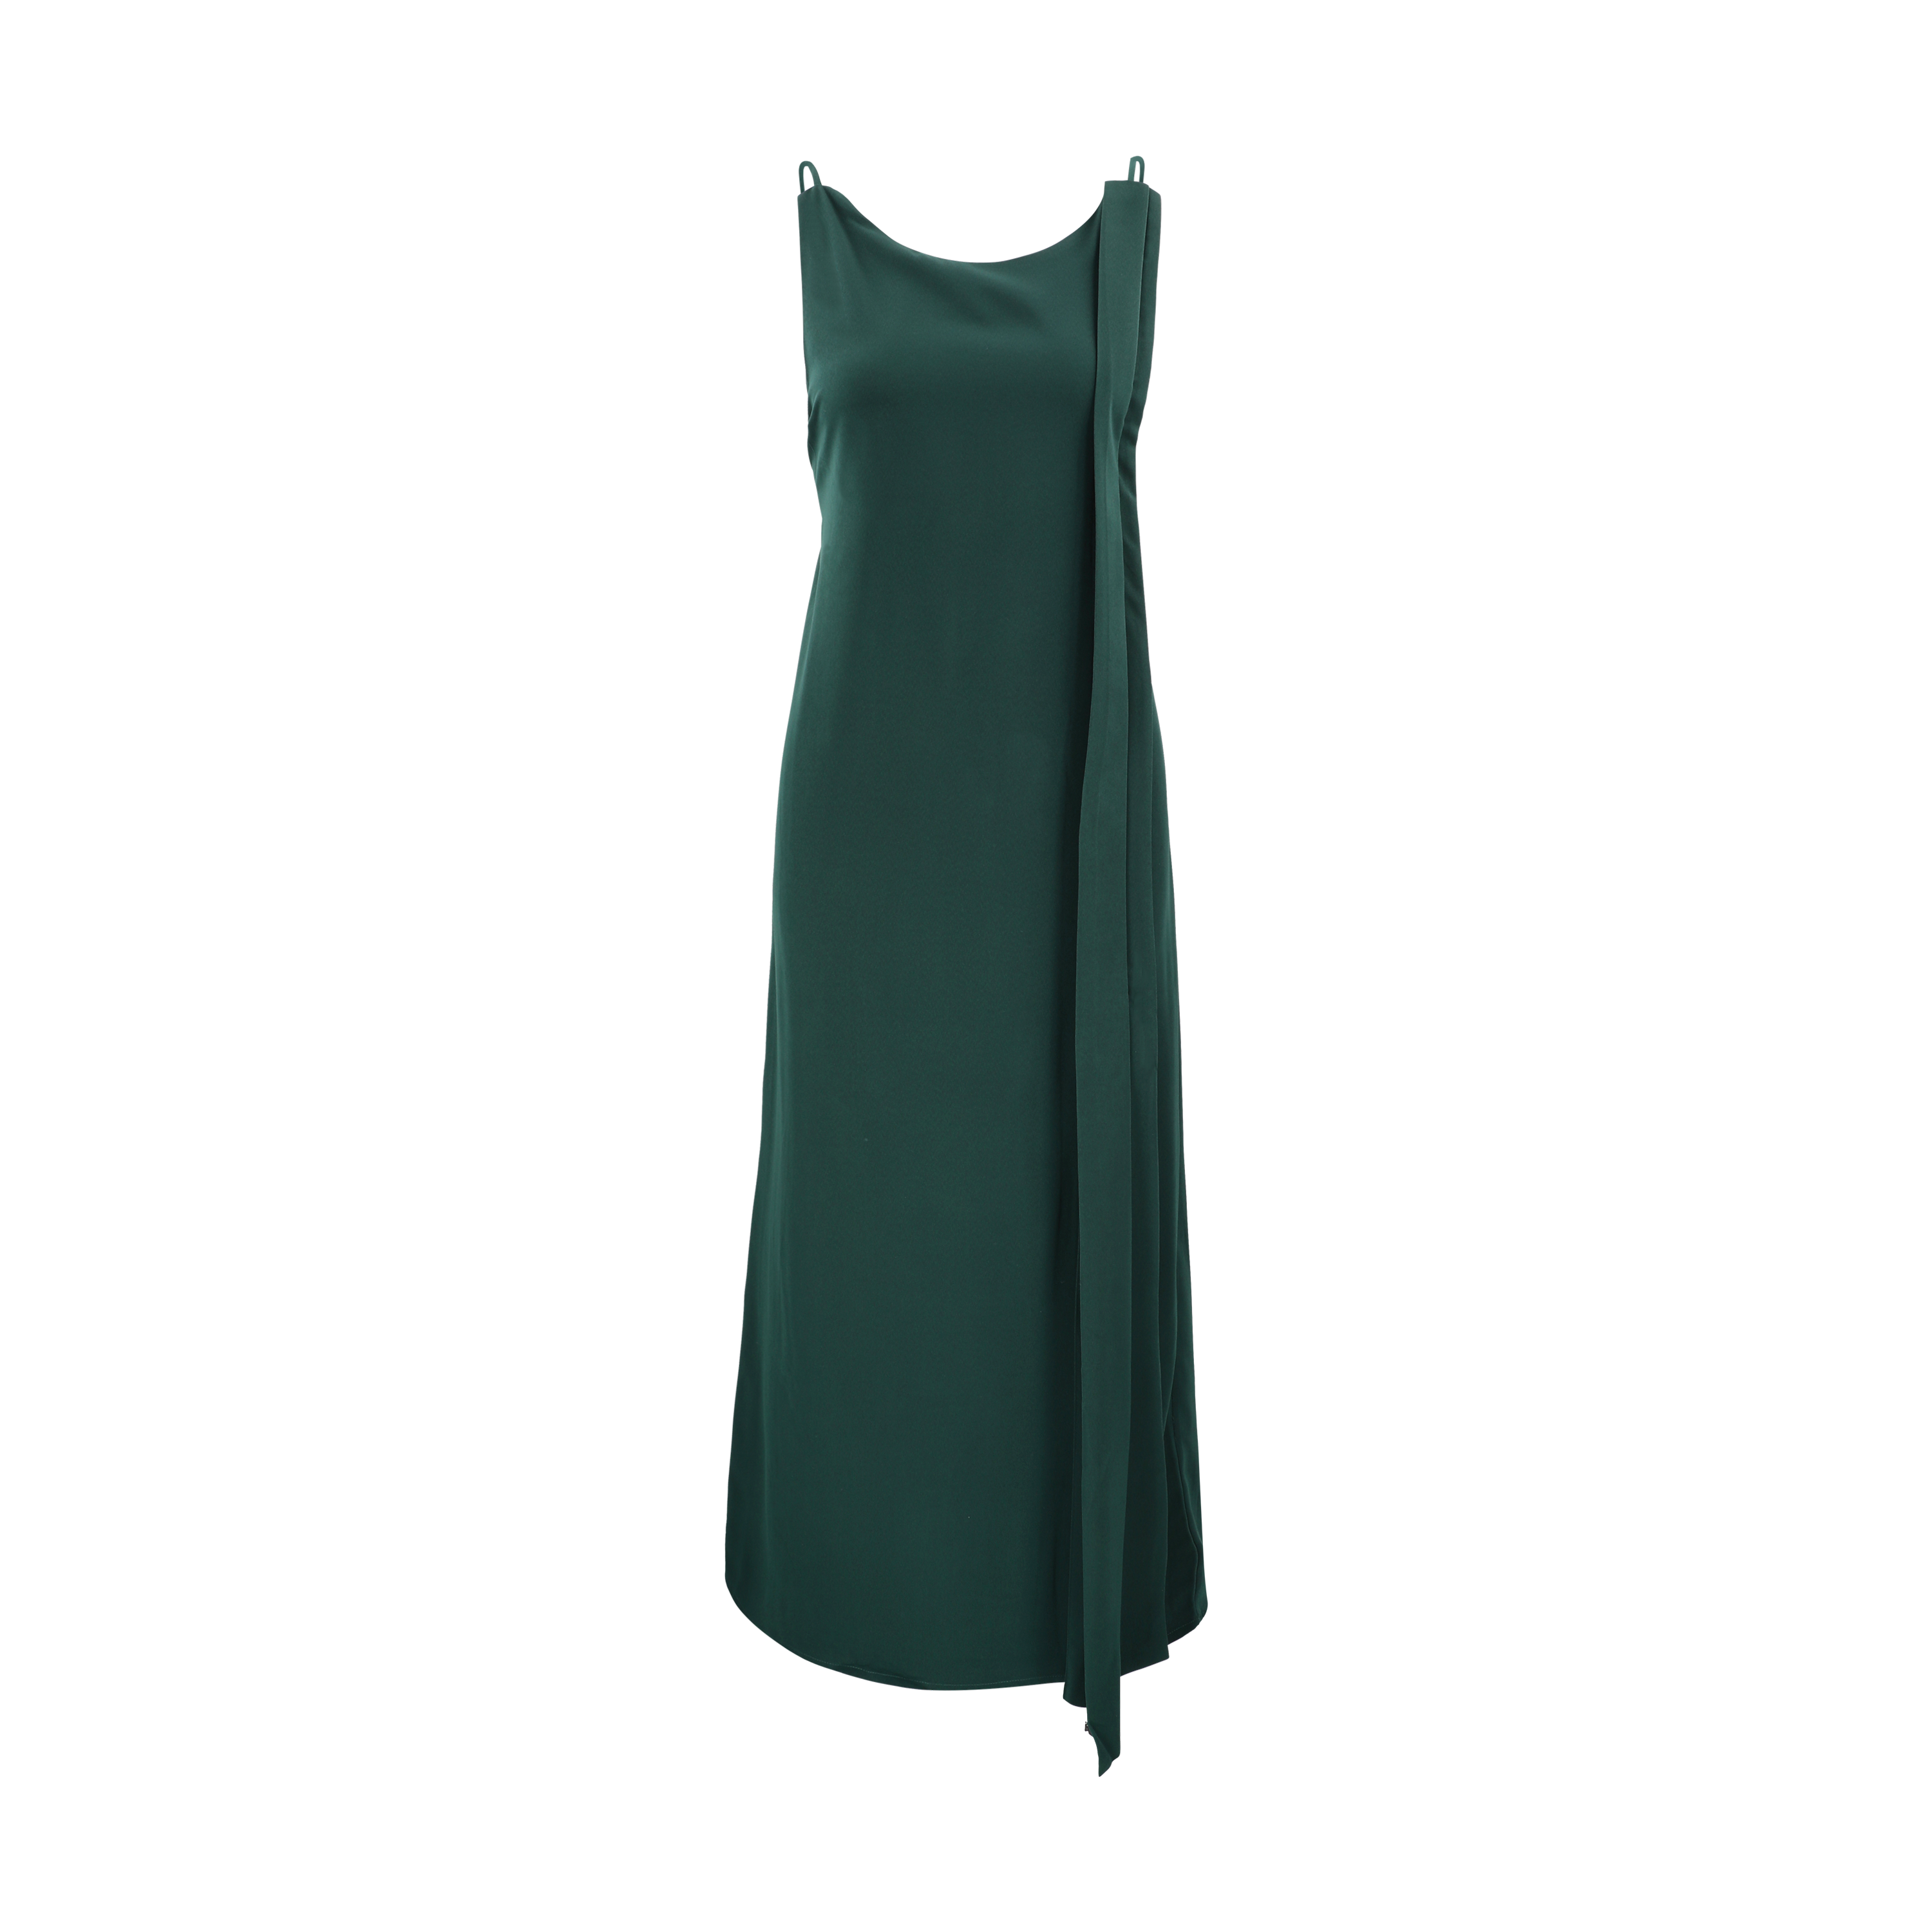 Elyse Dress